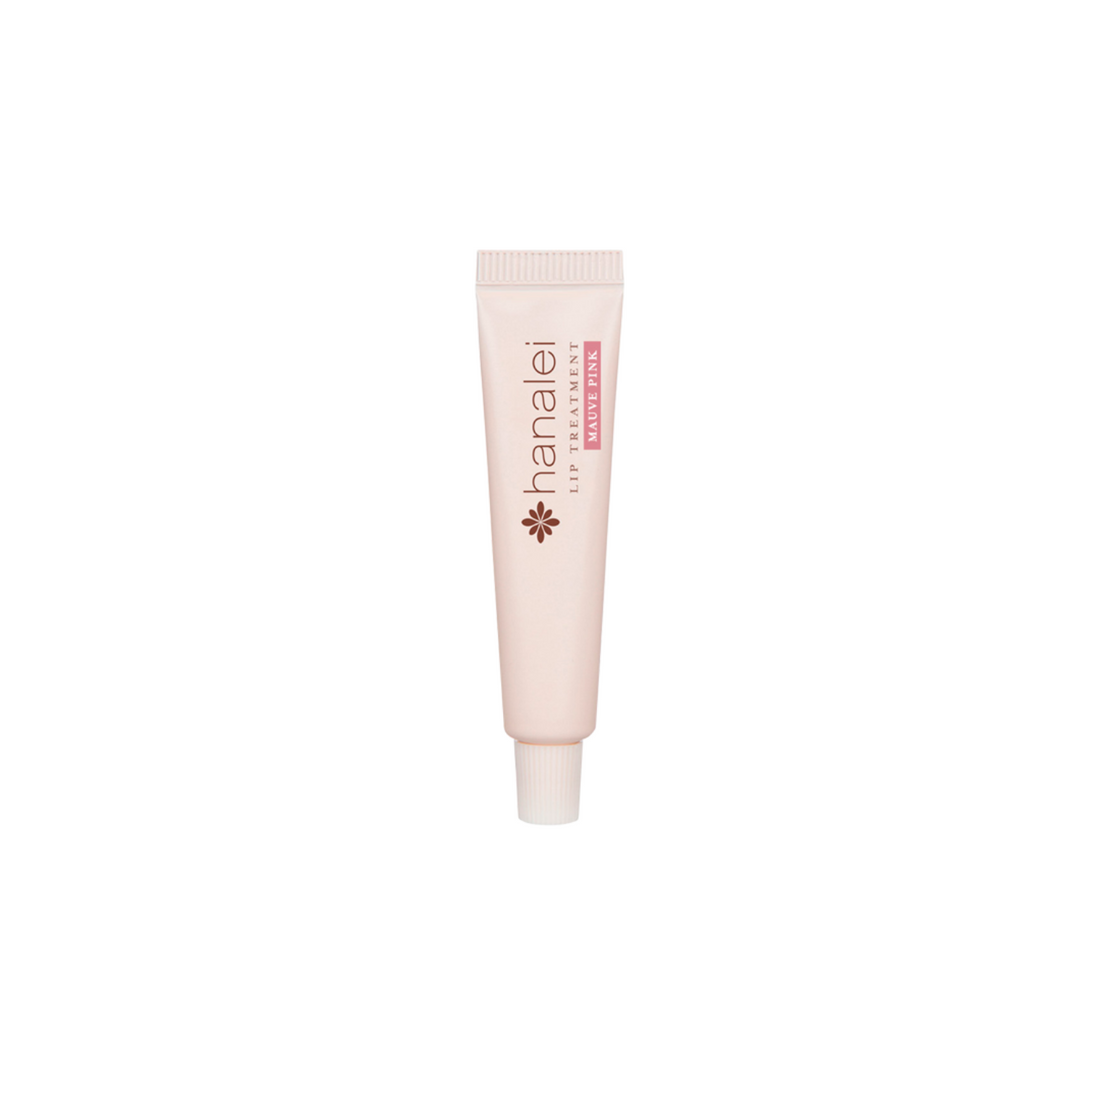 kukui oil lip treatment sample in mauve pink (5ml)